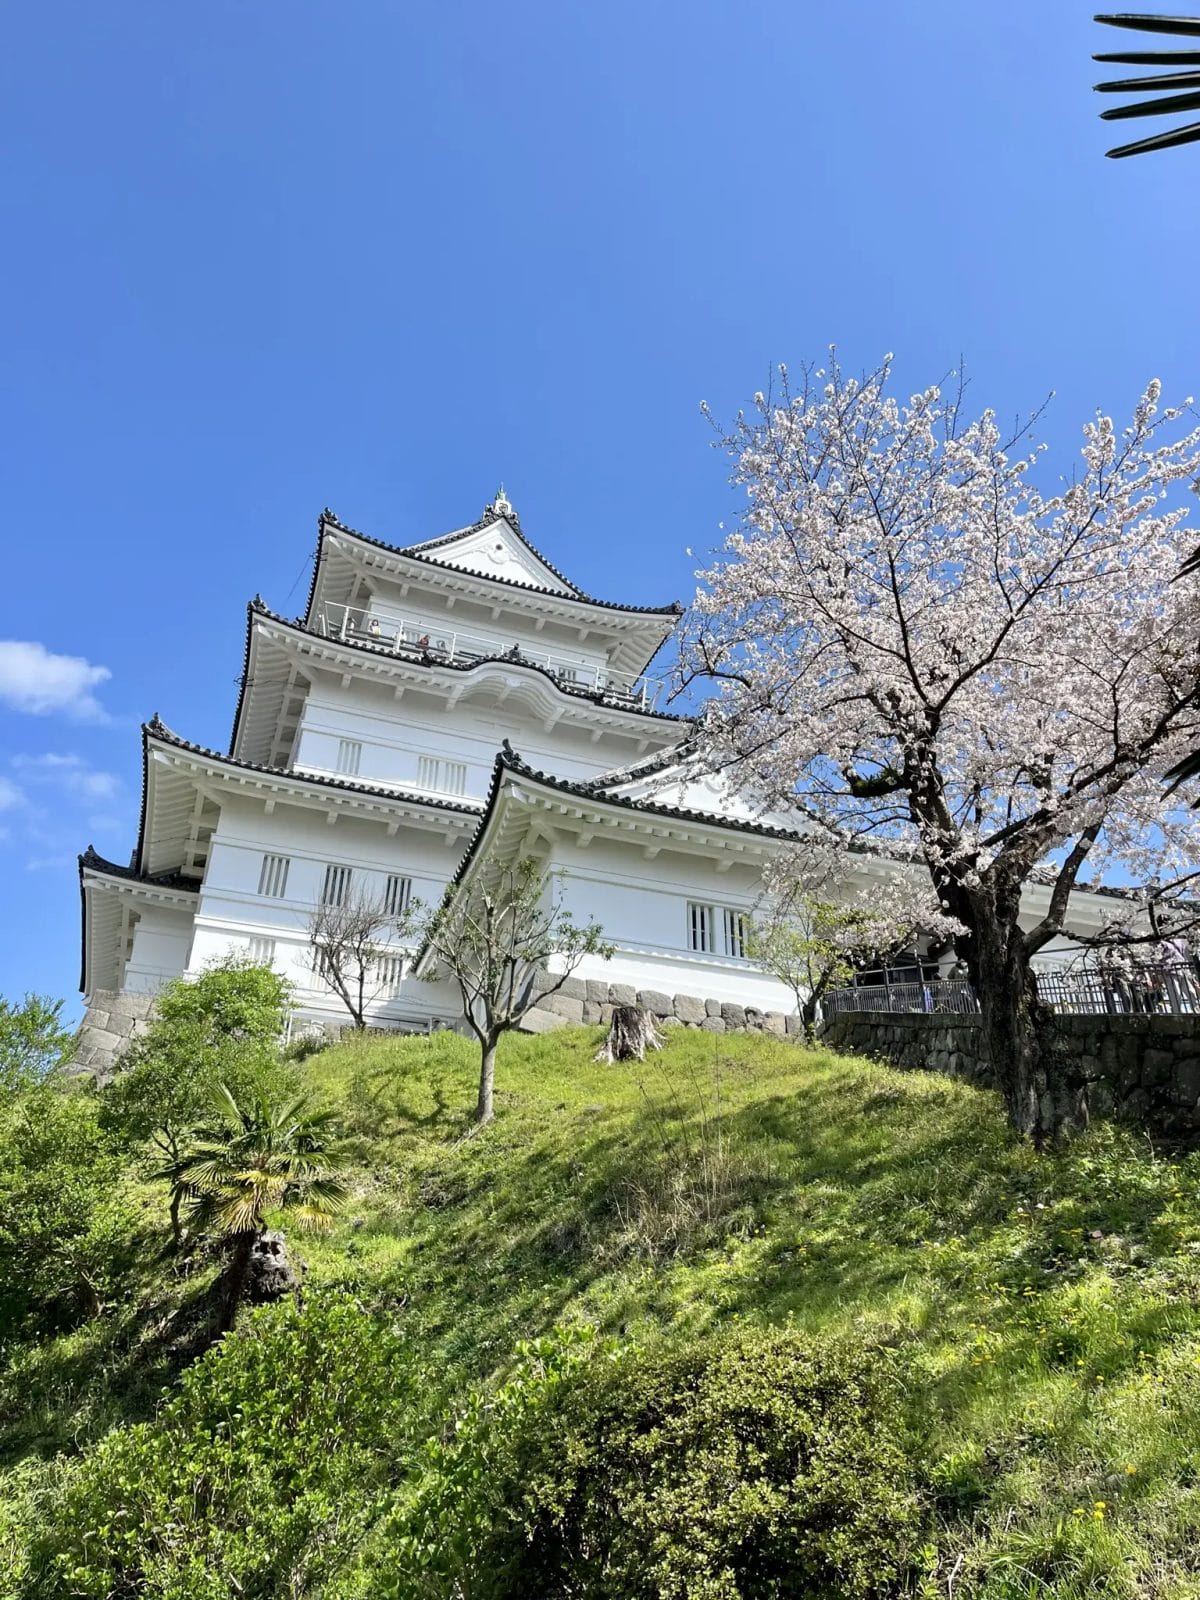 Odawara Castle cherry blossoms\